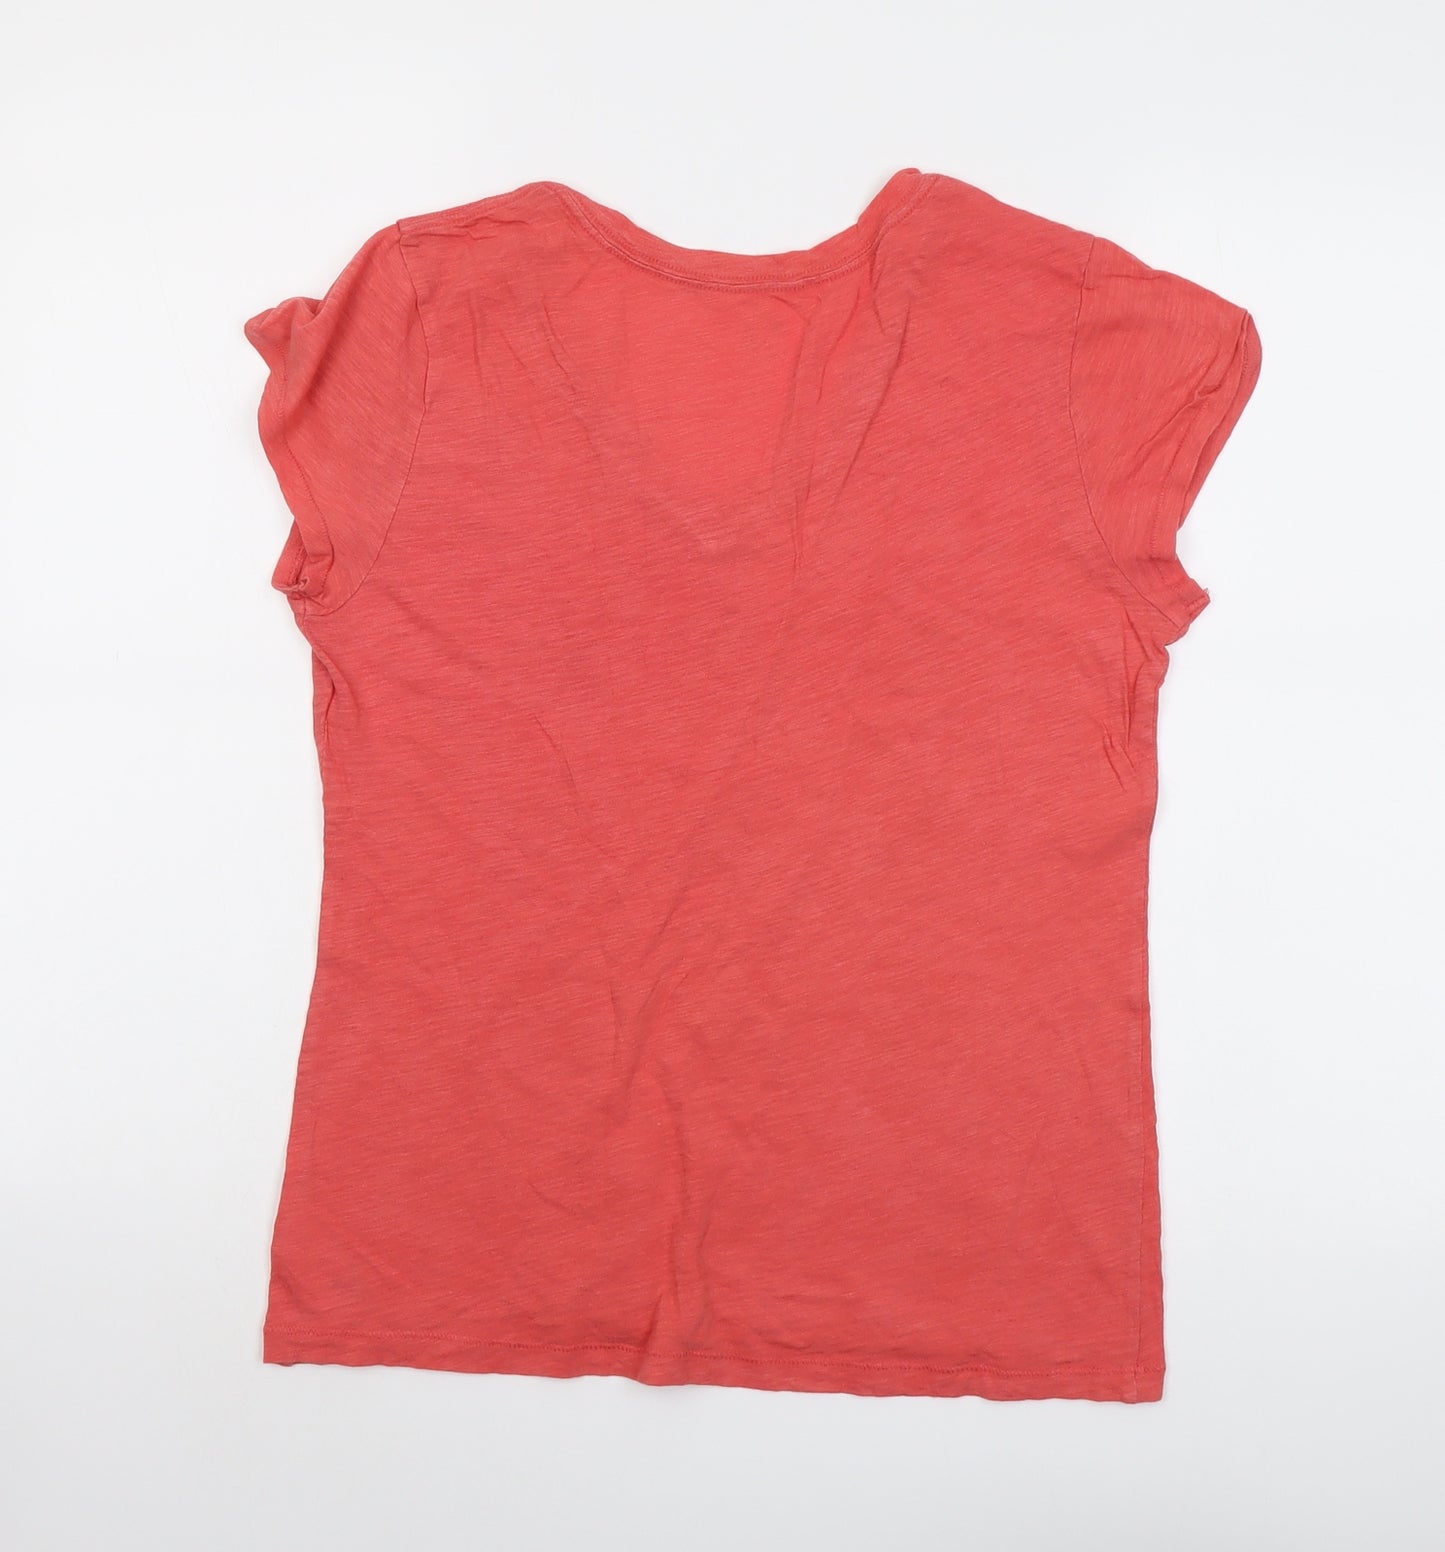 Gap Womens Red Cotton Basic T-Shirt Size M V-Neck